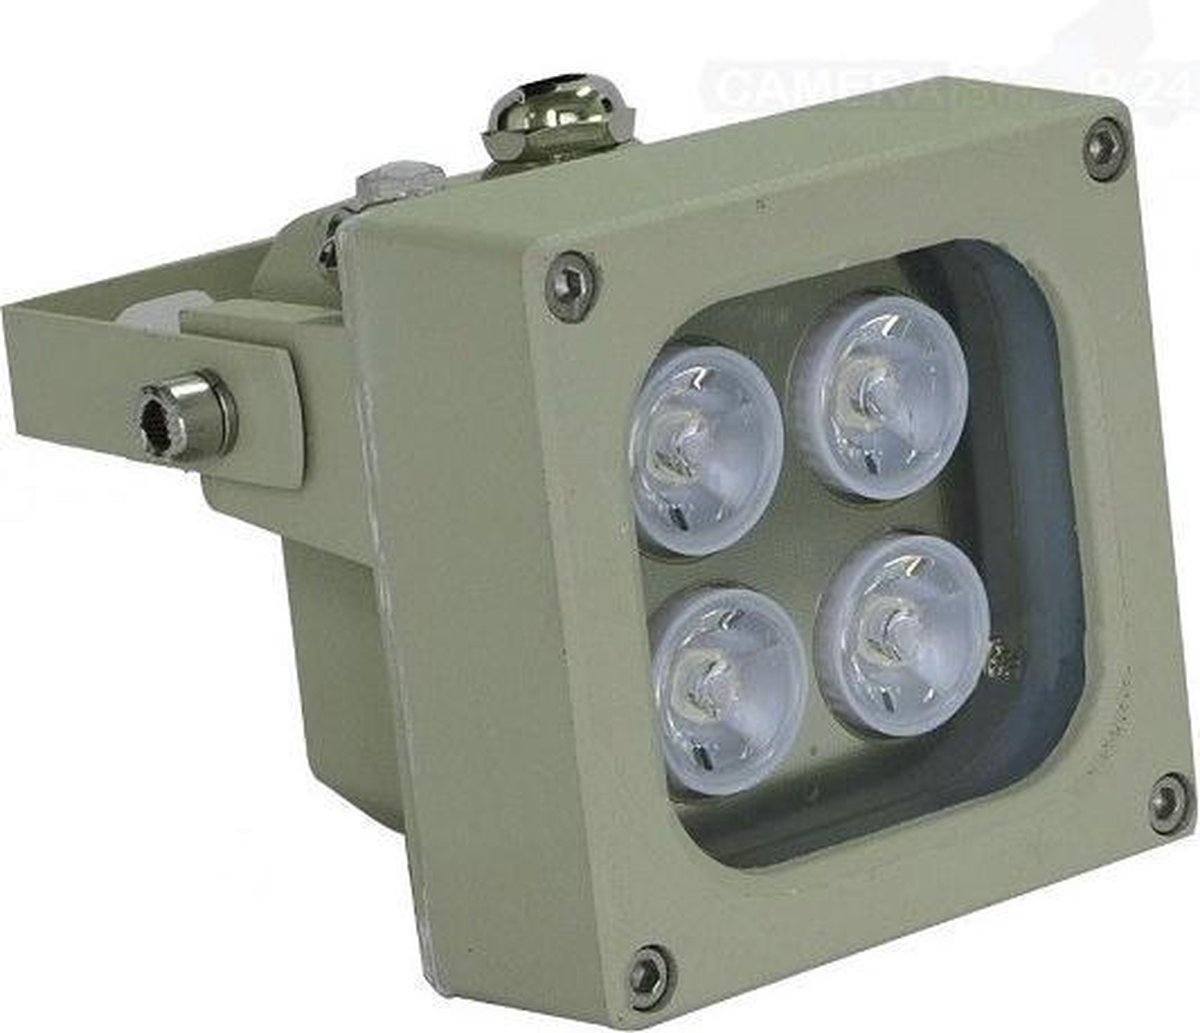 IR Illuminator - Verhoogt Nachtzicht Tot 100 Meter - 4 LEDs - Kijkhoek 30 Graden - Aluminium Behuizing - Binnen & Buiten - IR Lamp Camerabewaking